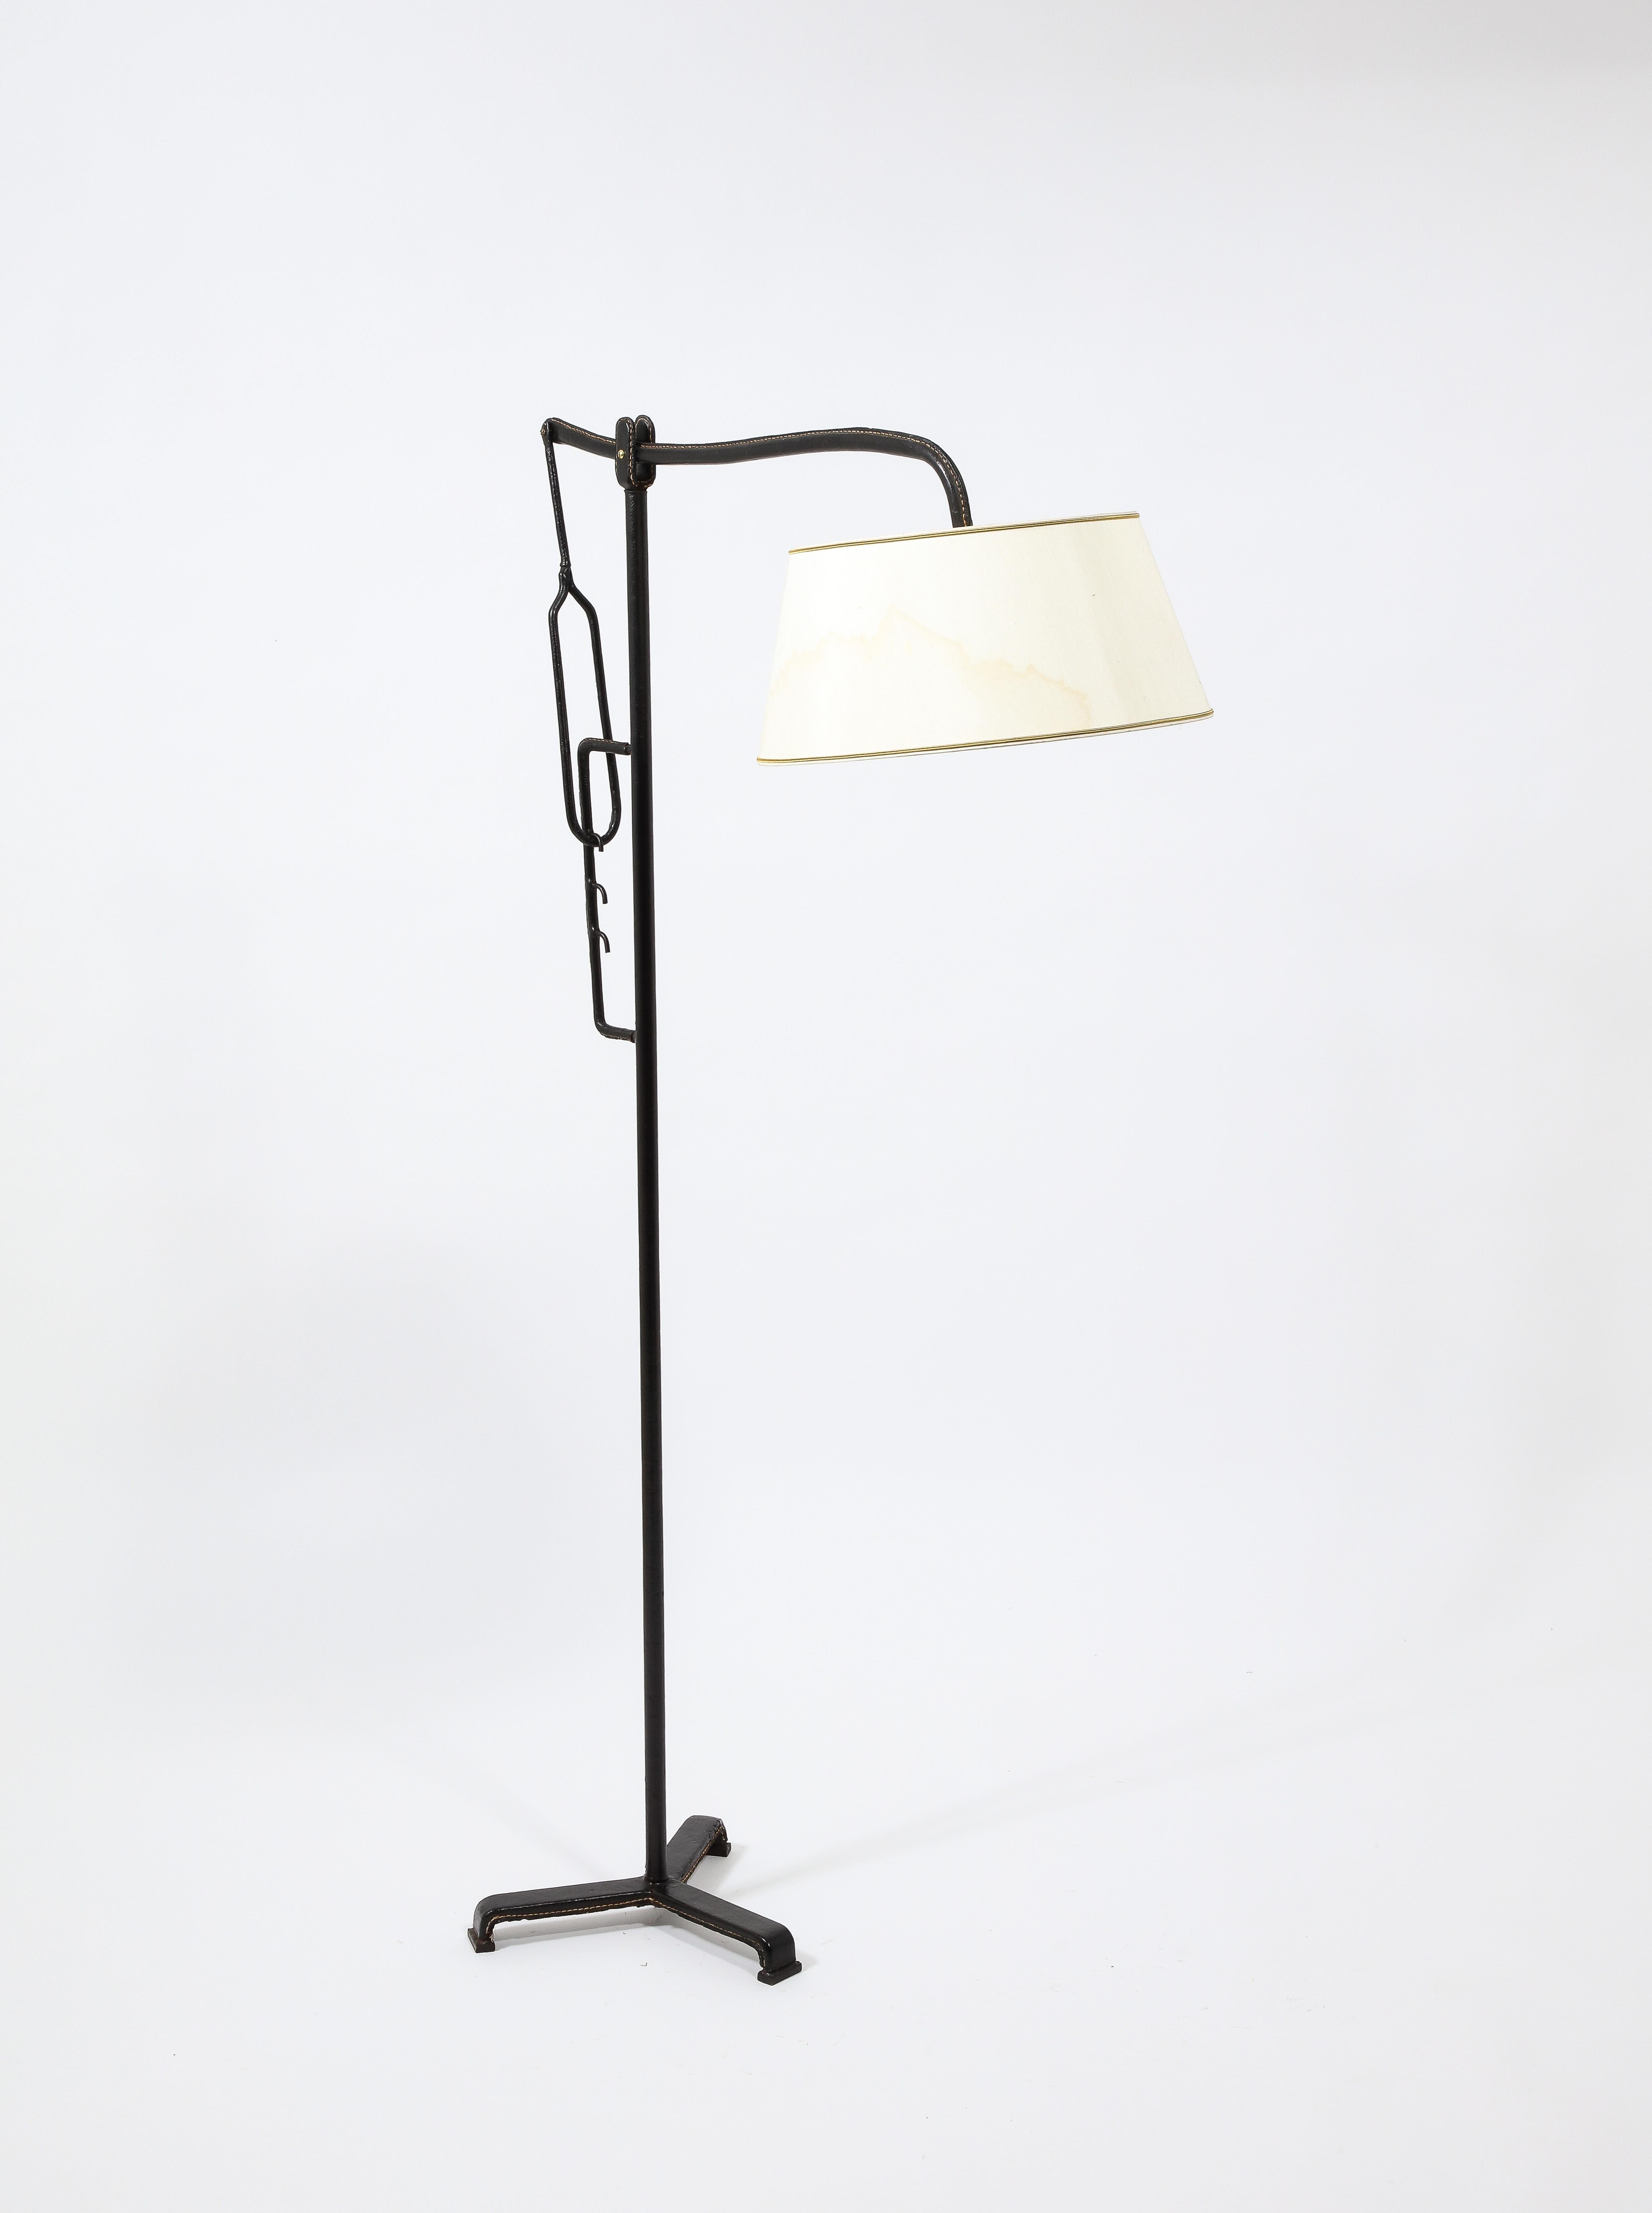 Jacques Adnet: Stehlampe aus schwarzem Leder, Frankreich, 1940er Jahre (20. Jahrhundert) im Angebot